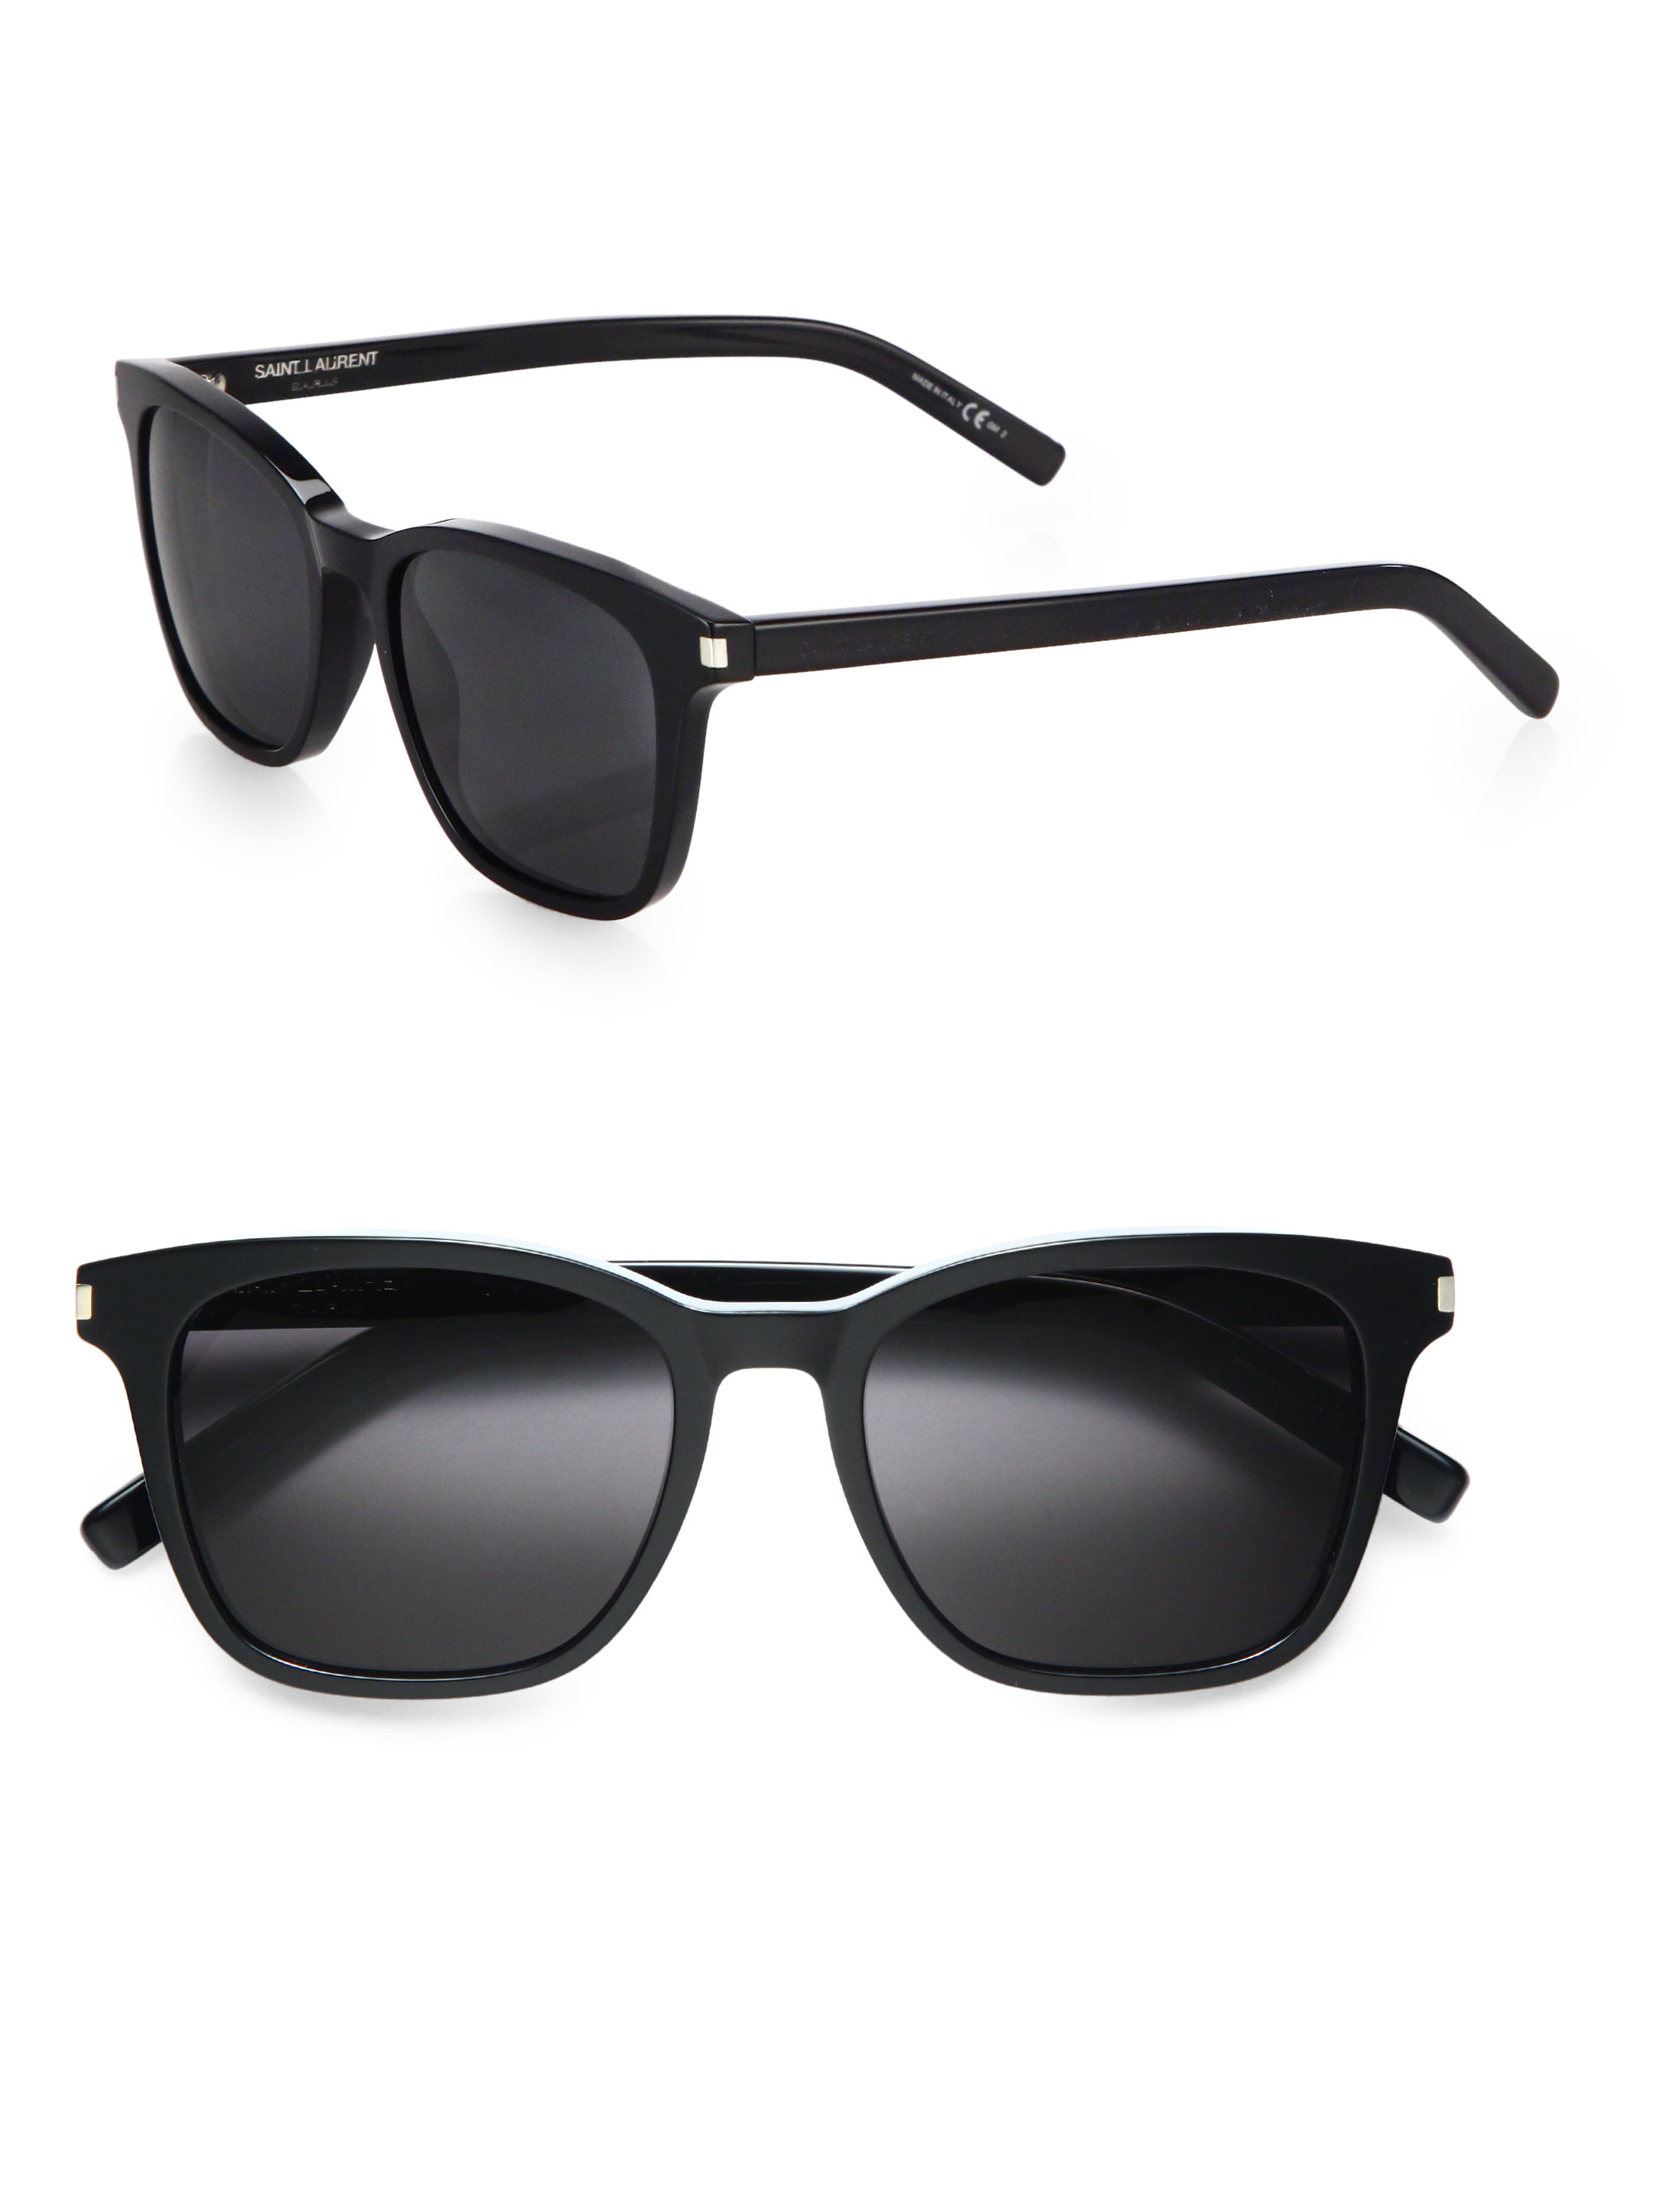 Saint Laurent Black Sunglasses Top Sellers, 59% OFF | www 